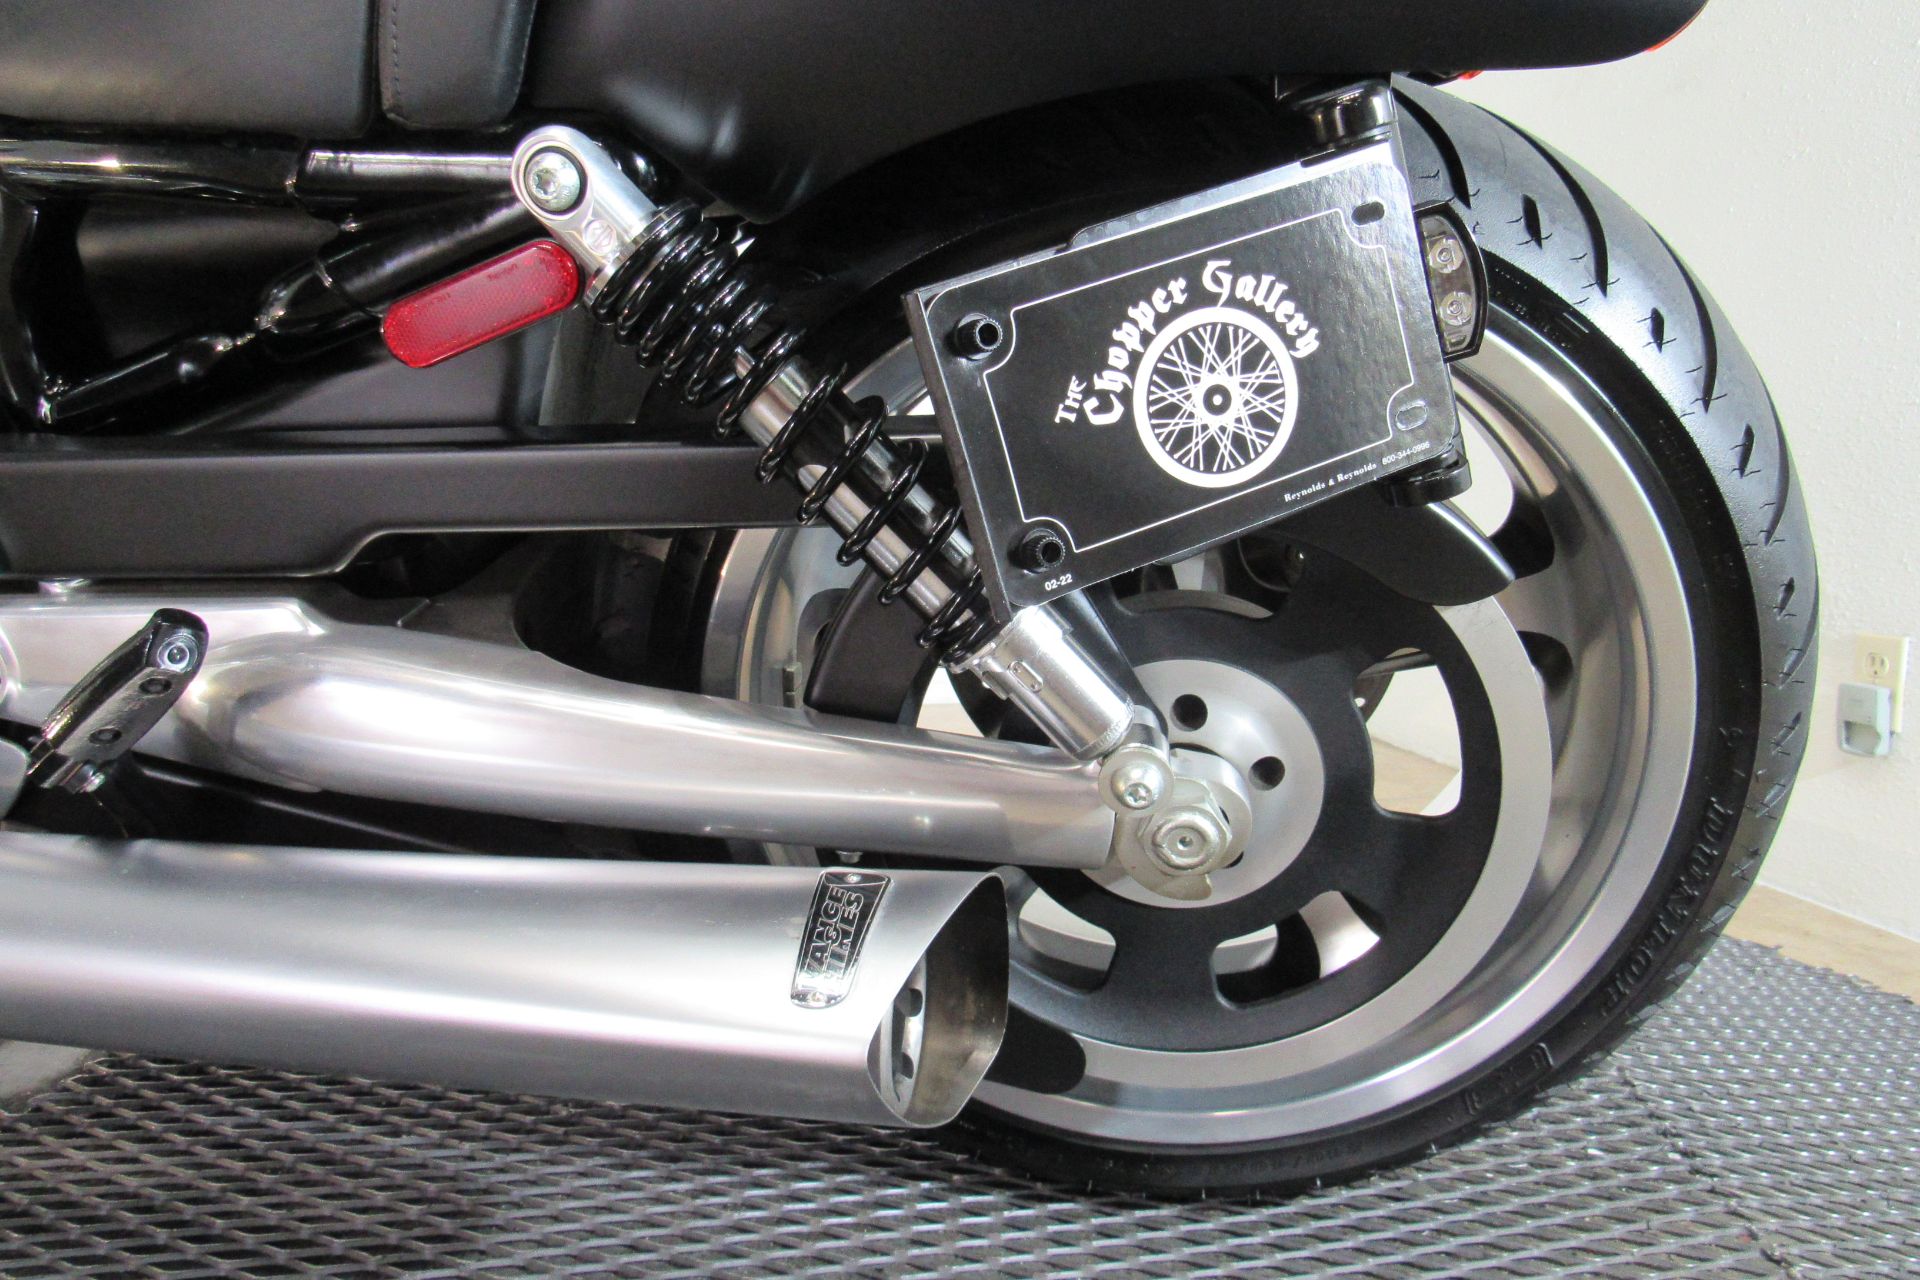 2010 Harley-Davidson V-Rod Muscle® in Temecula, California - Photo 35